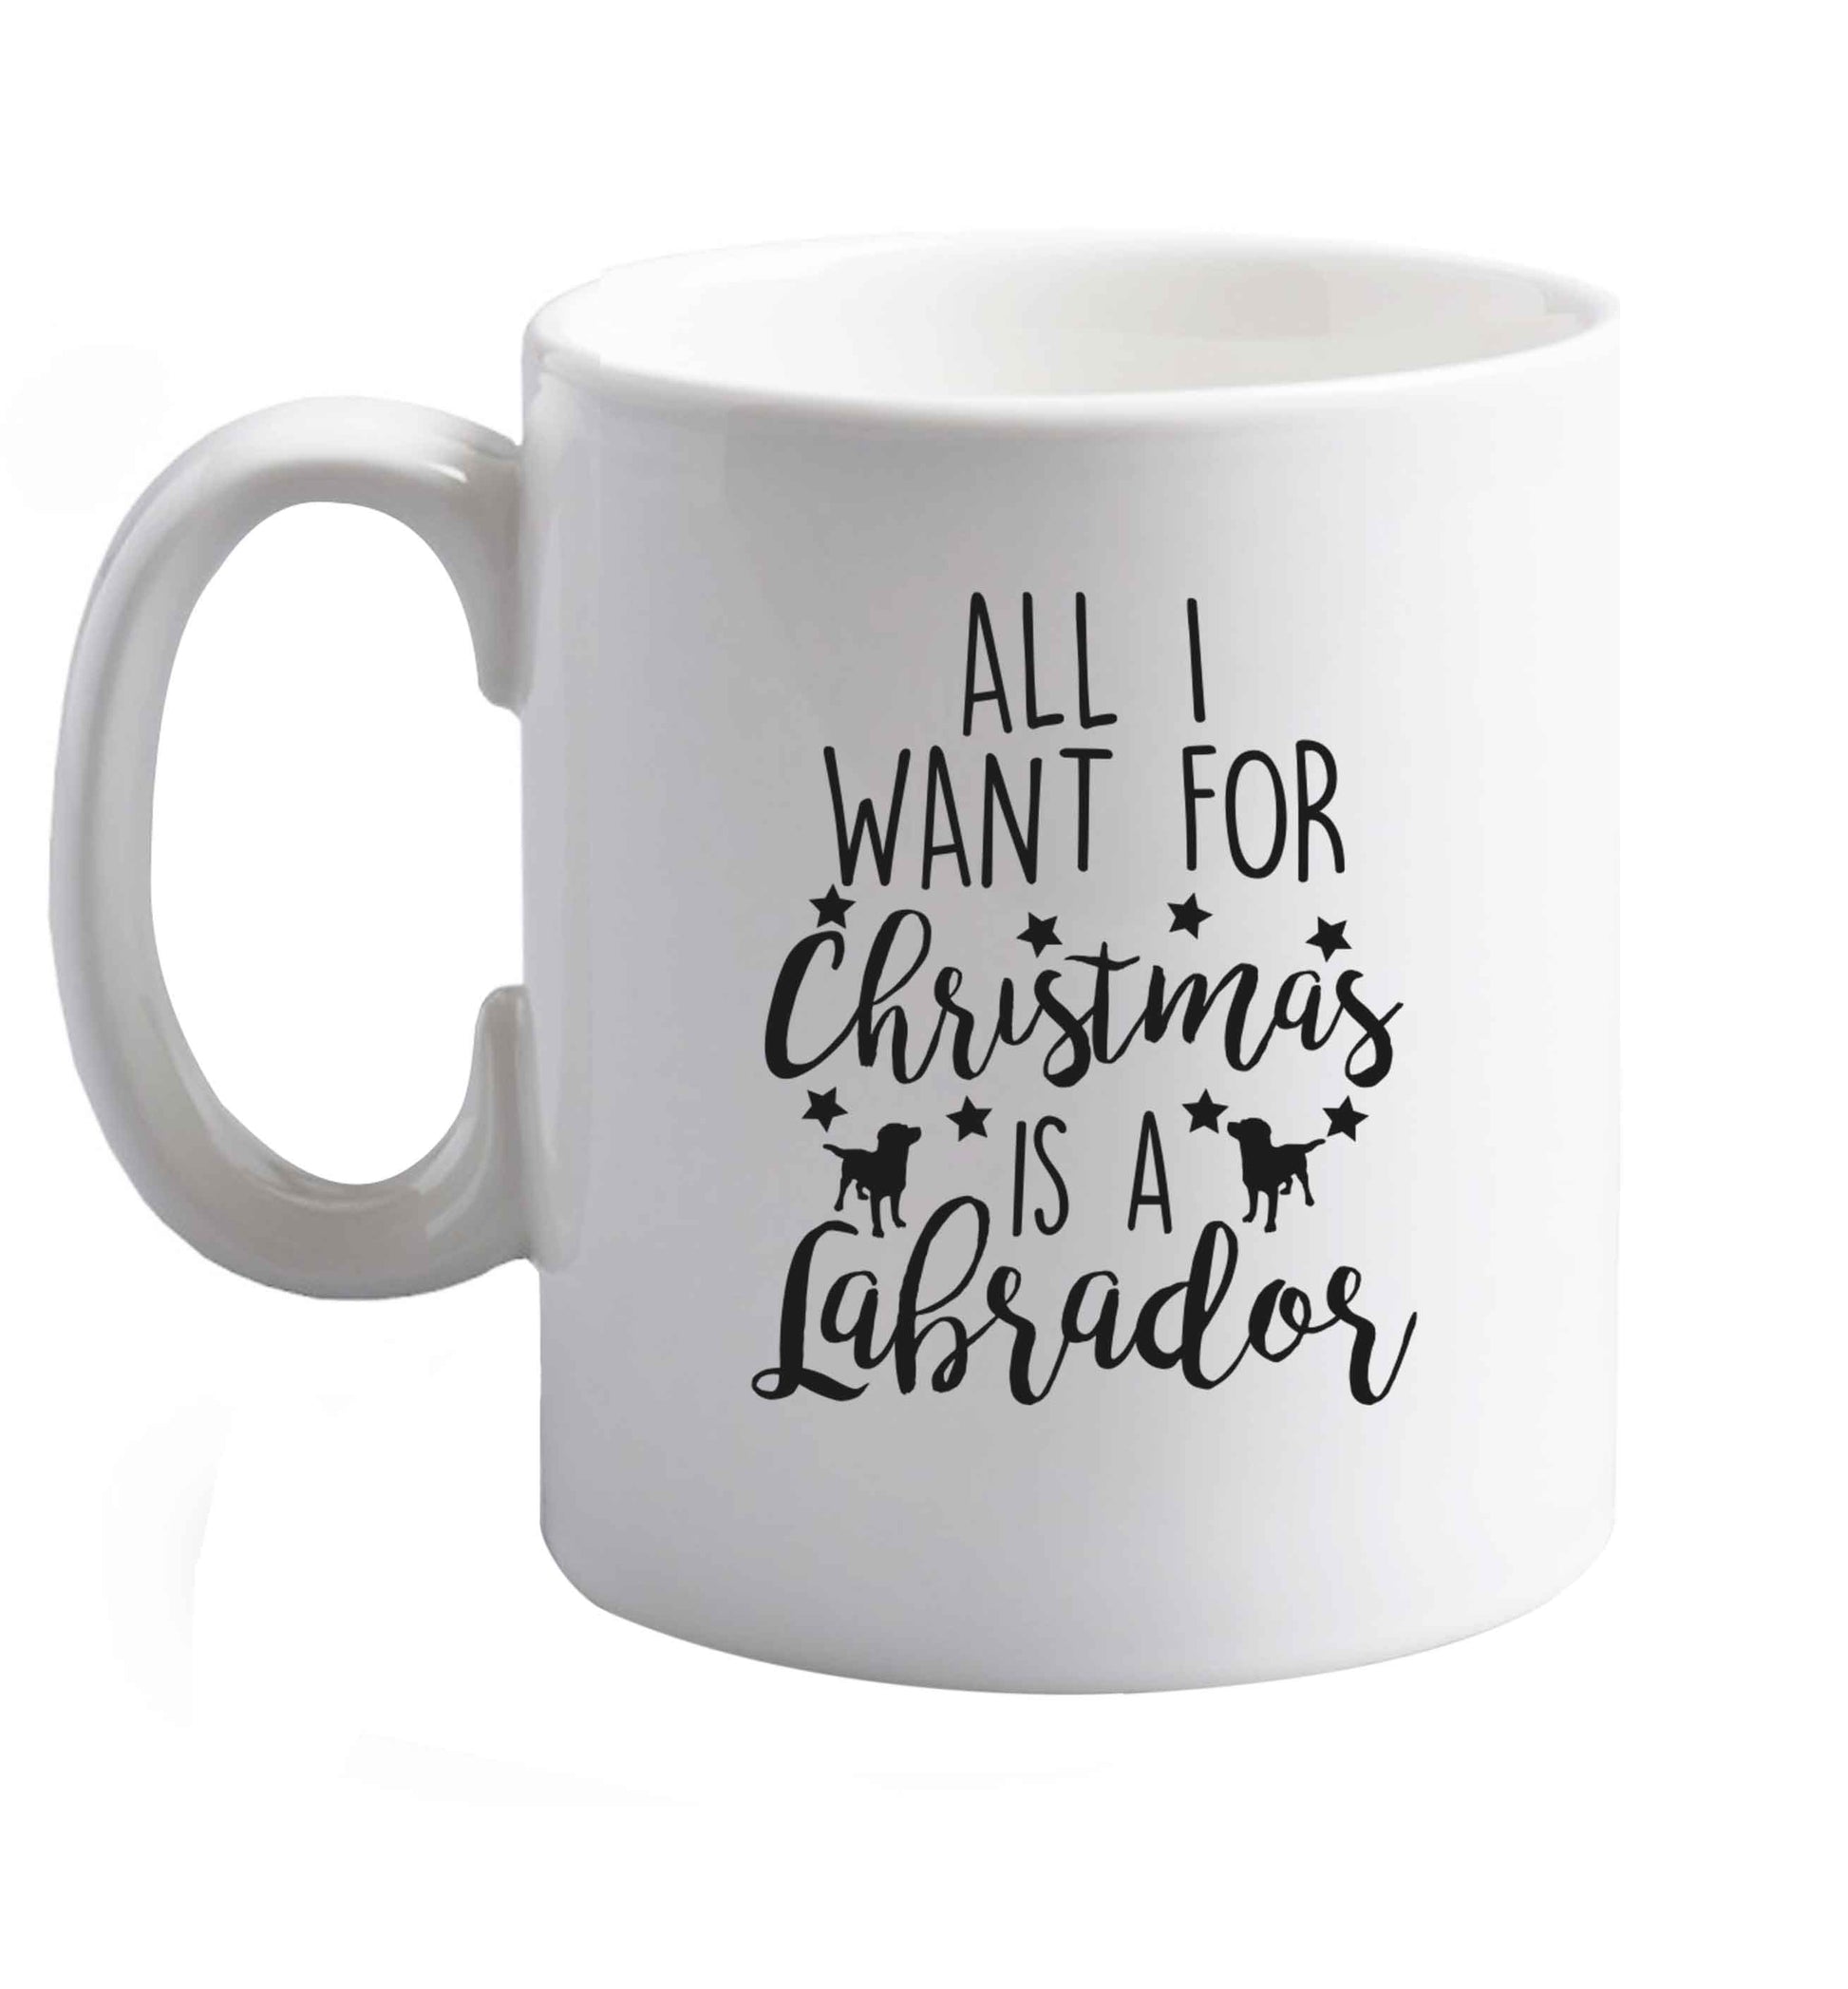 10 oz All I want for Christmas is a labrador ceramic mug right handed